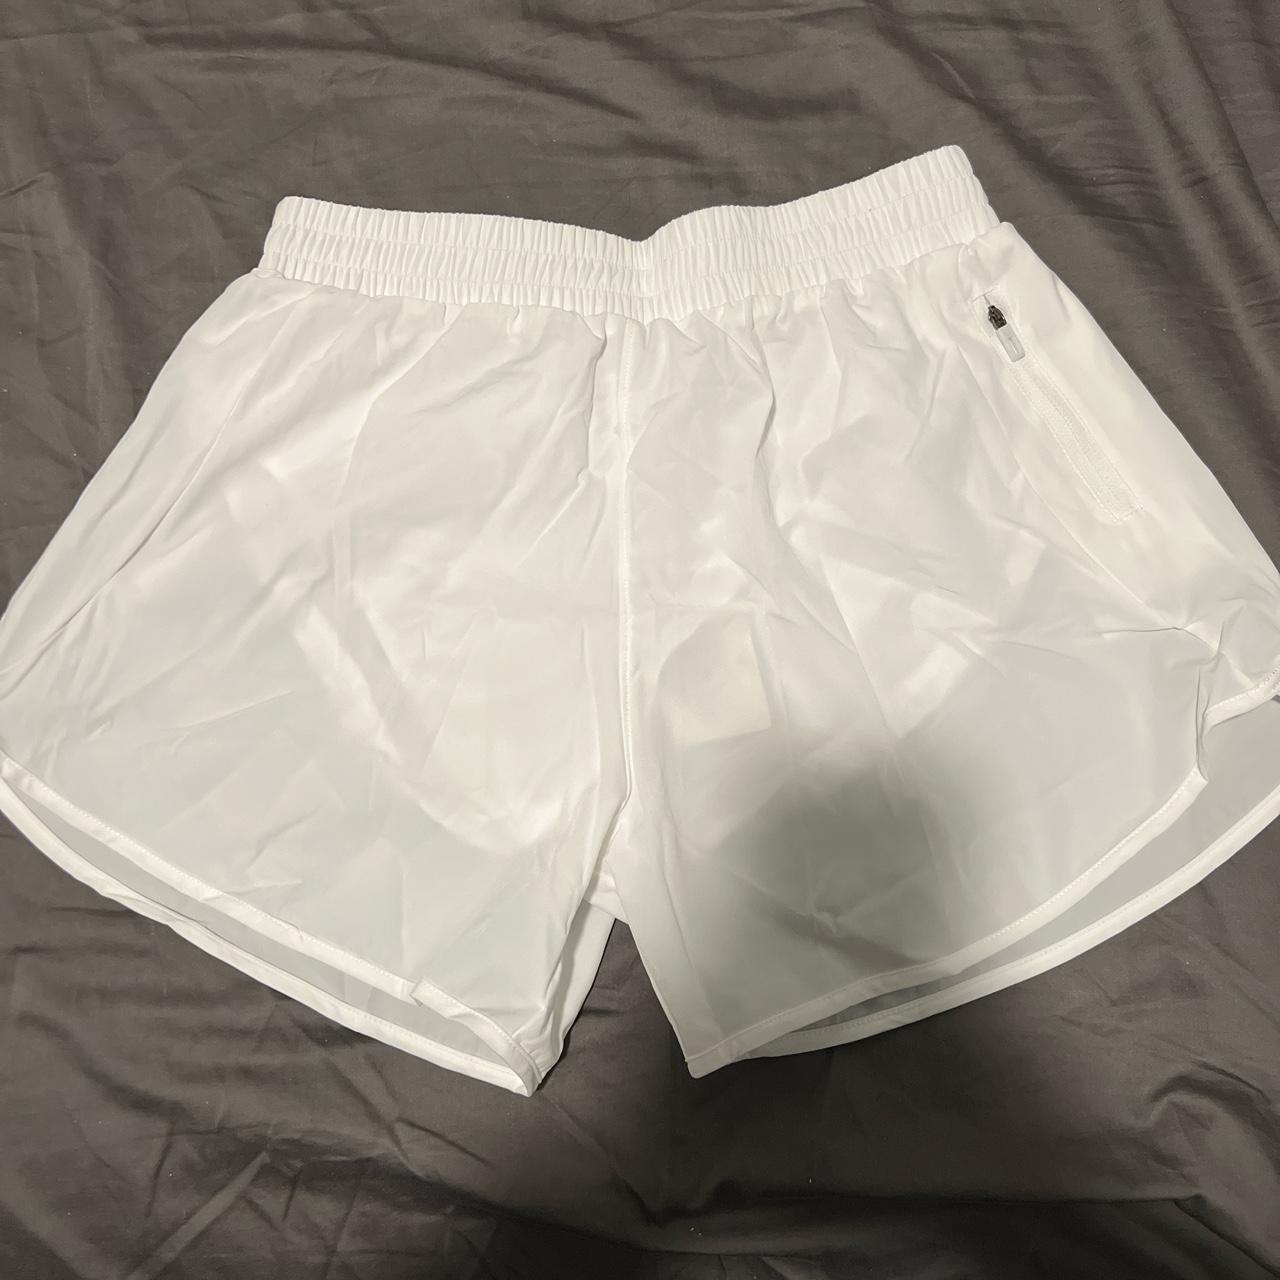 White running shorts - Depop